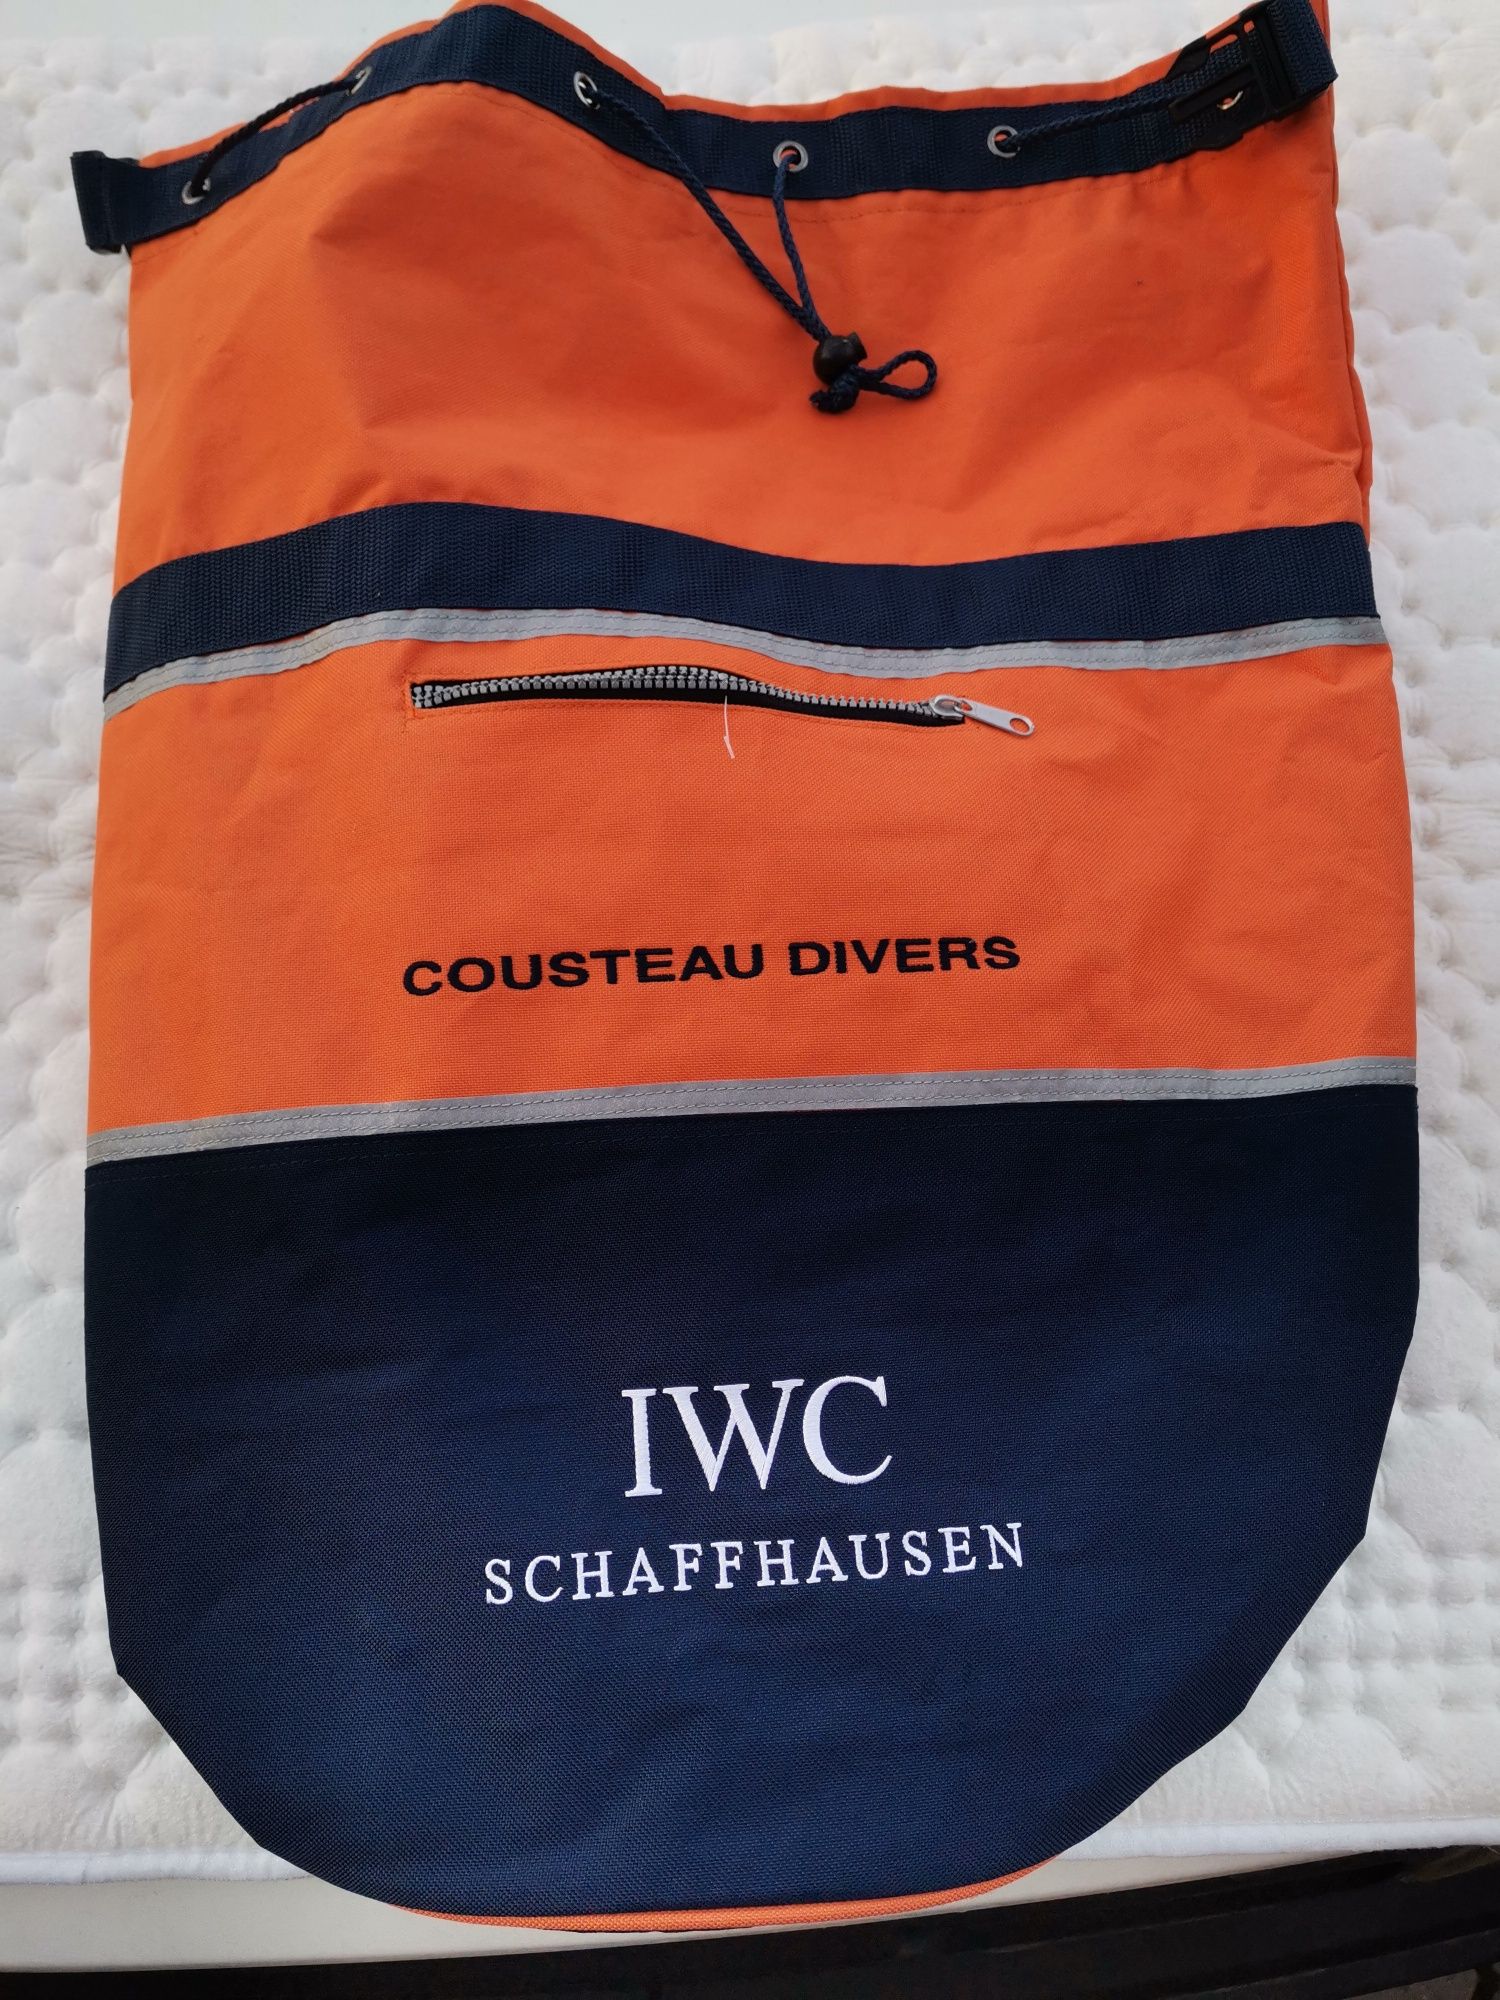 Rucsac IWC Schaffhausen Cousteau Divers